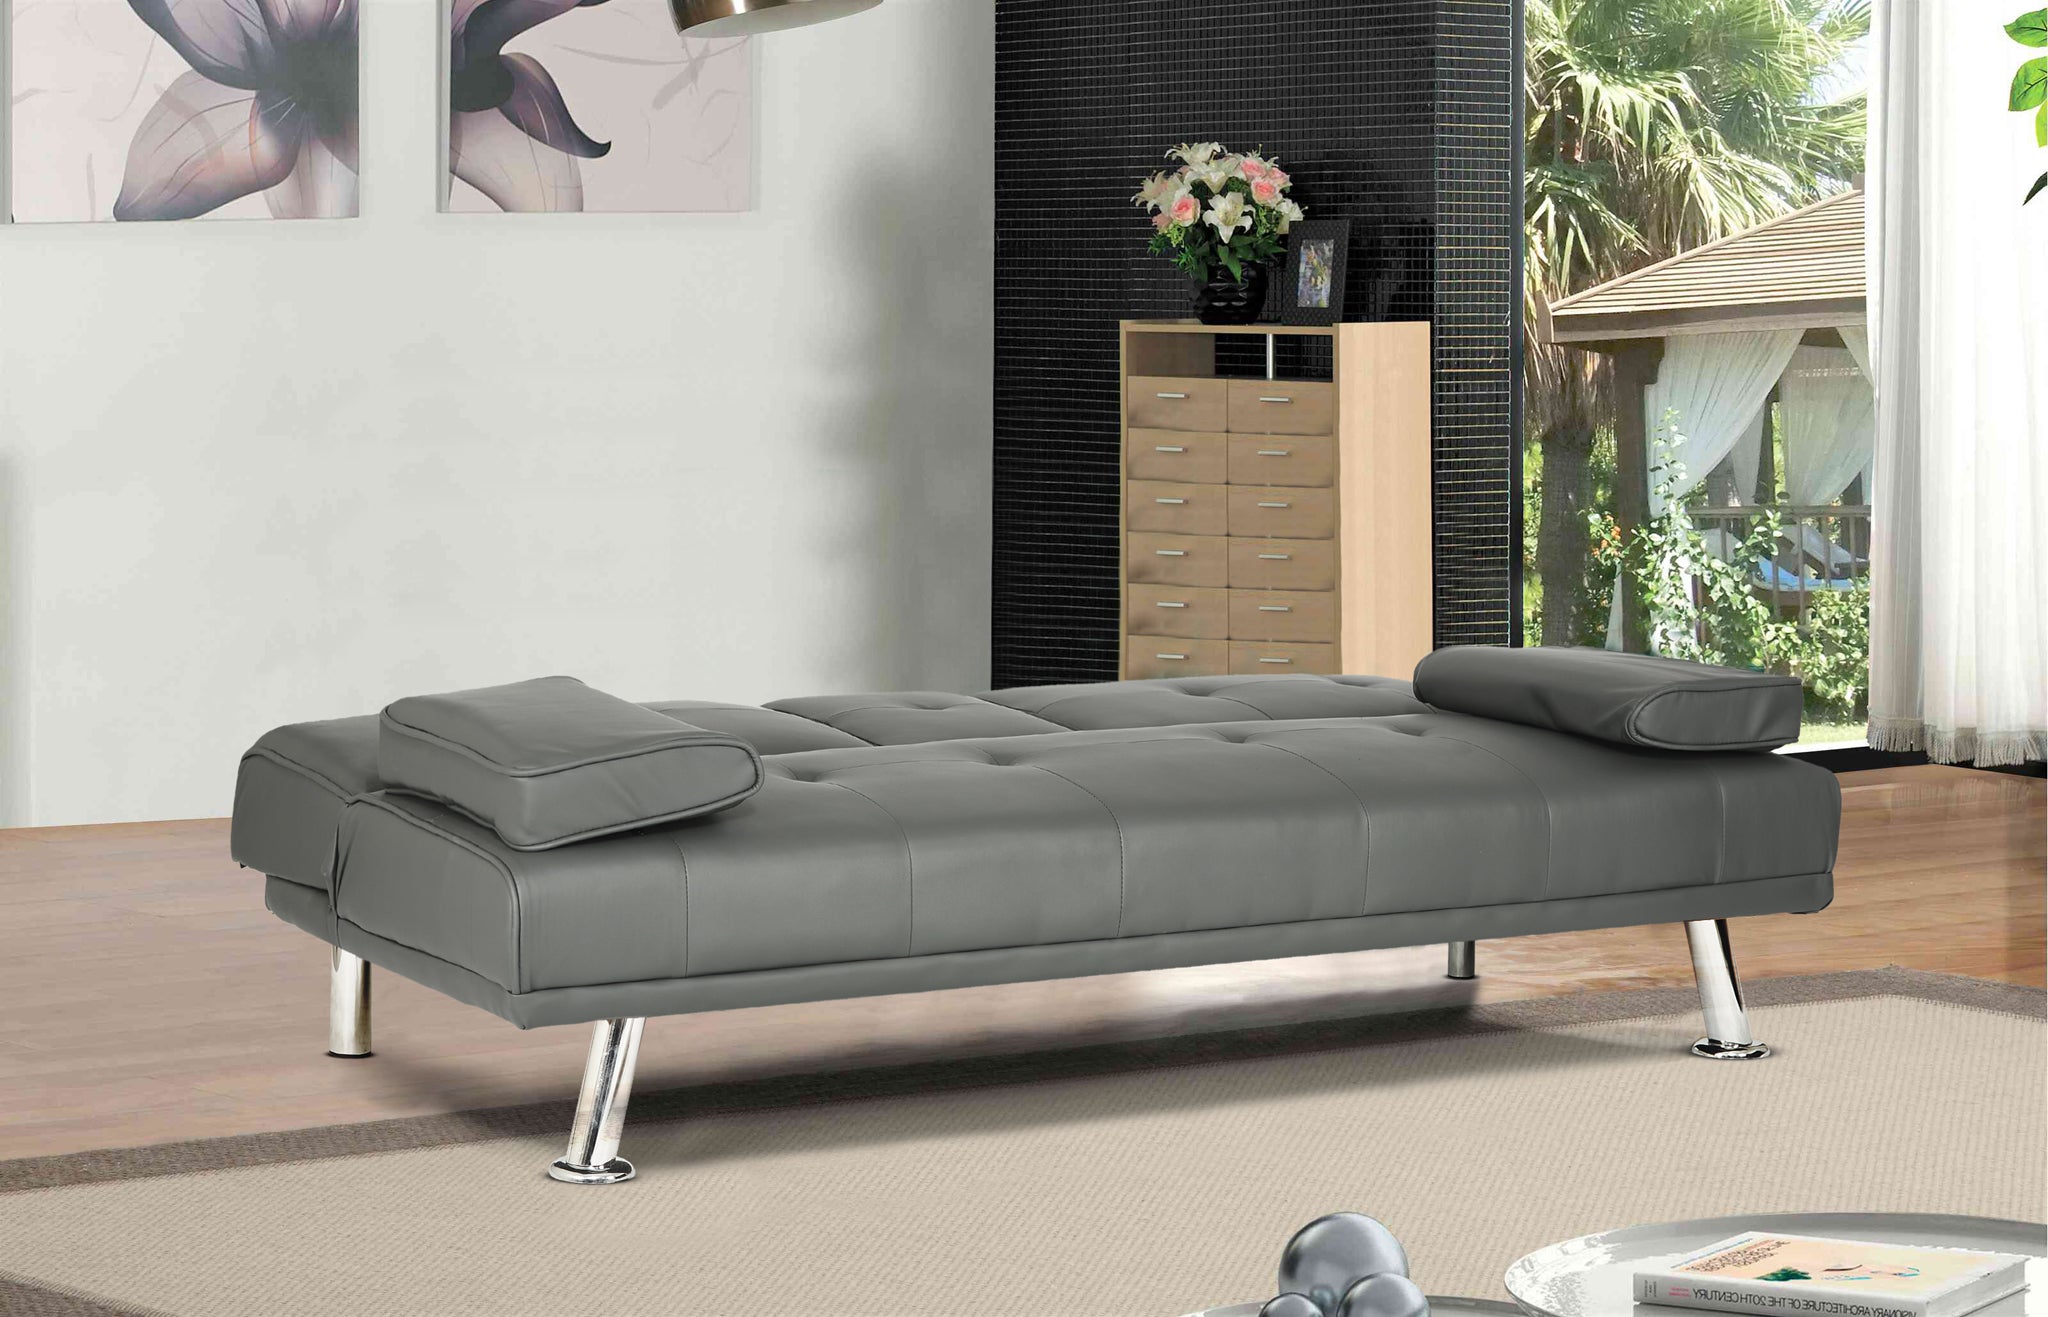 The 'Manhattan' Sofa Bed - Grey